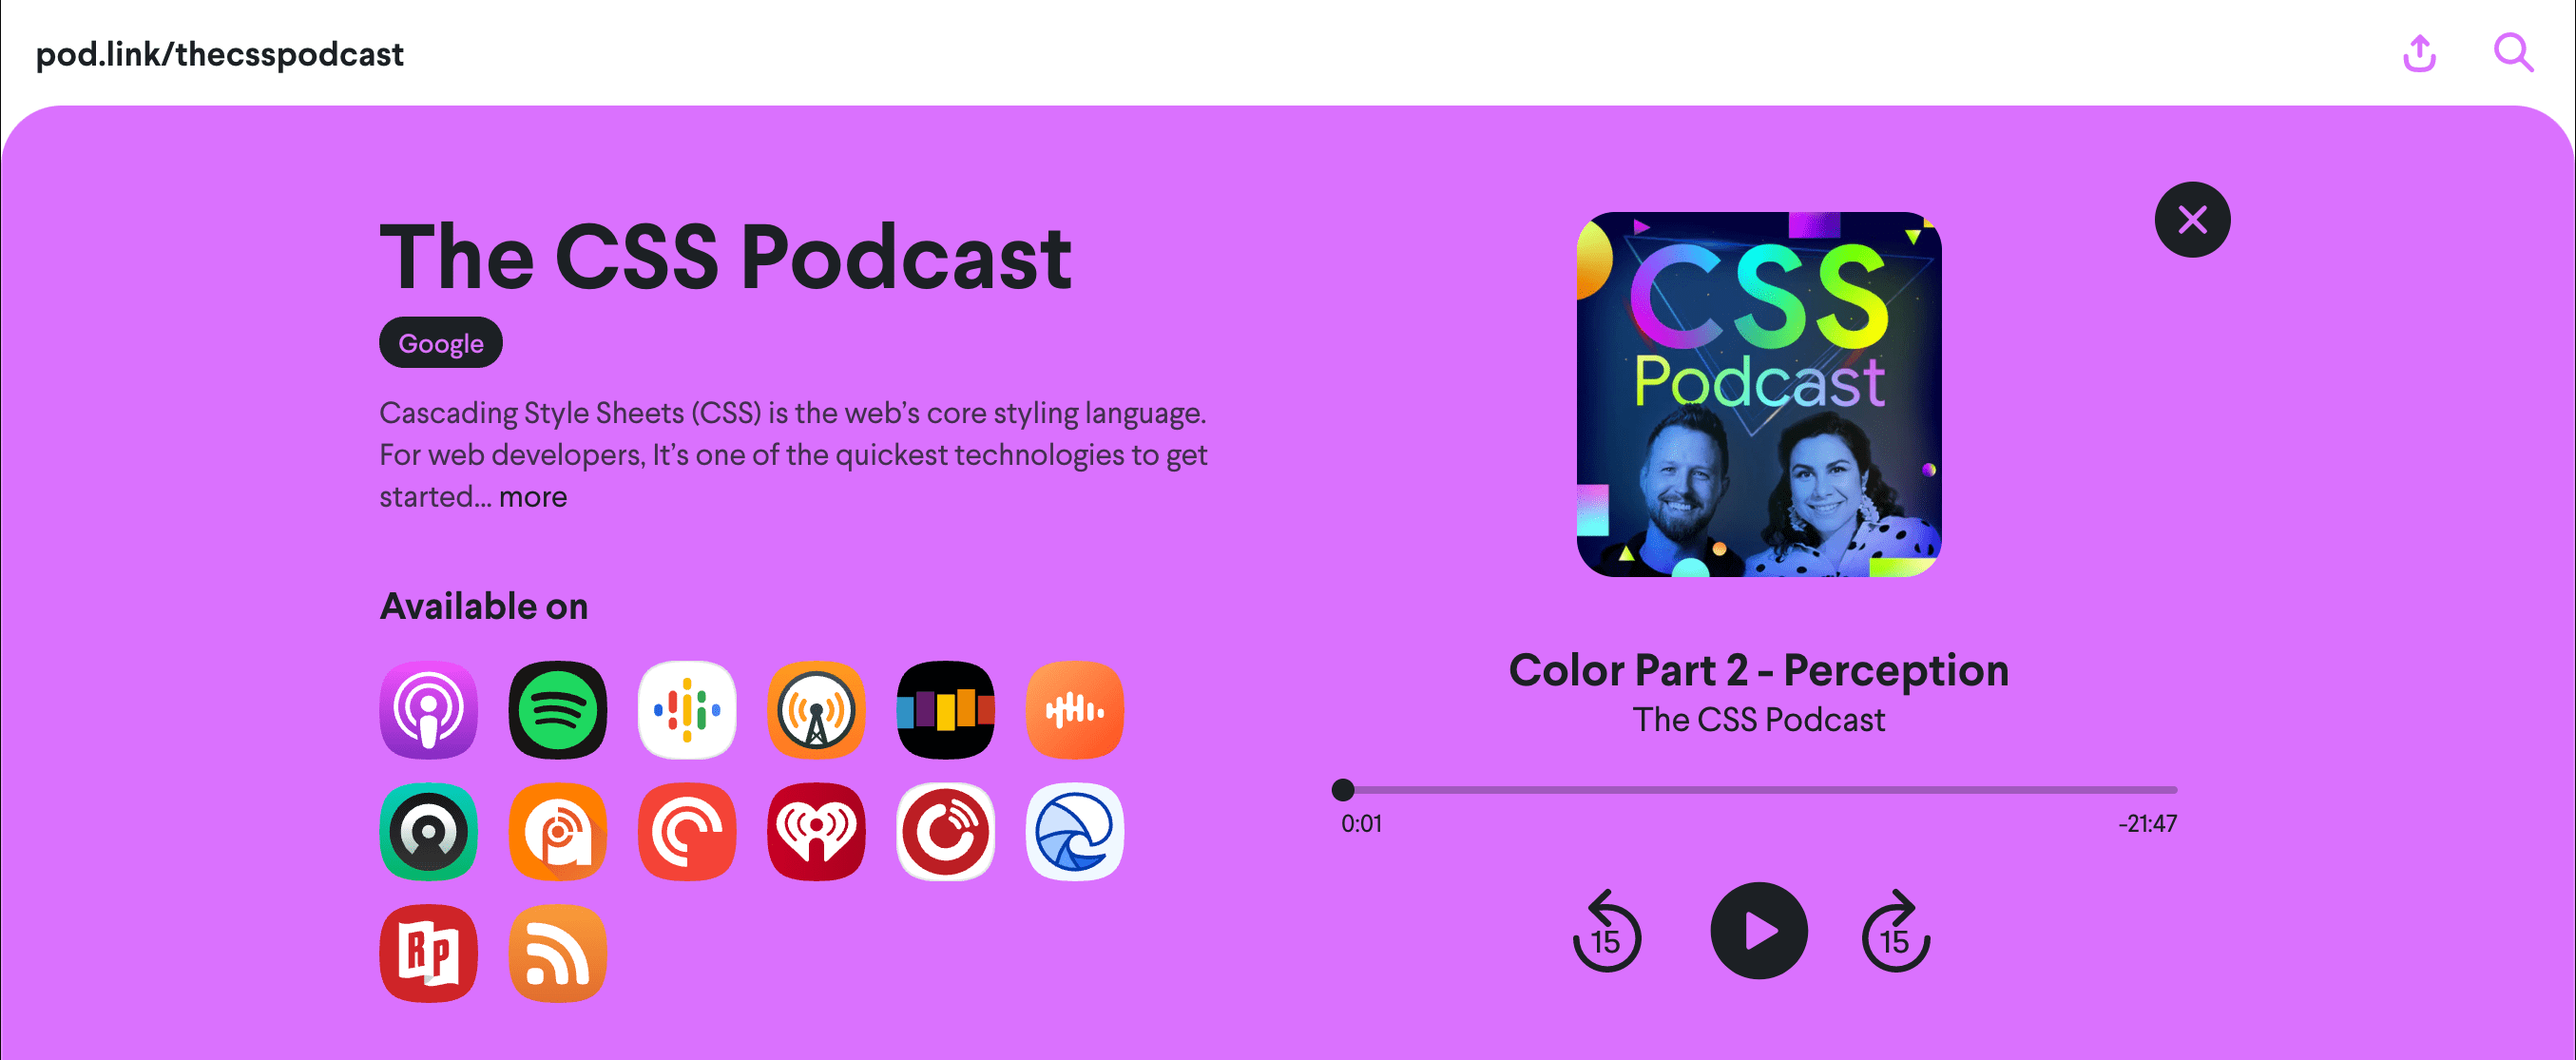 pod.link/csspodcast 網頁的螢幕截圖，顯示「顏色 2：Perception」劇集